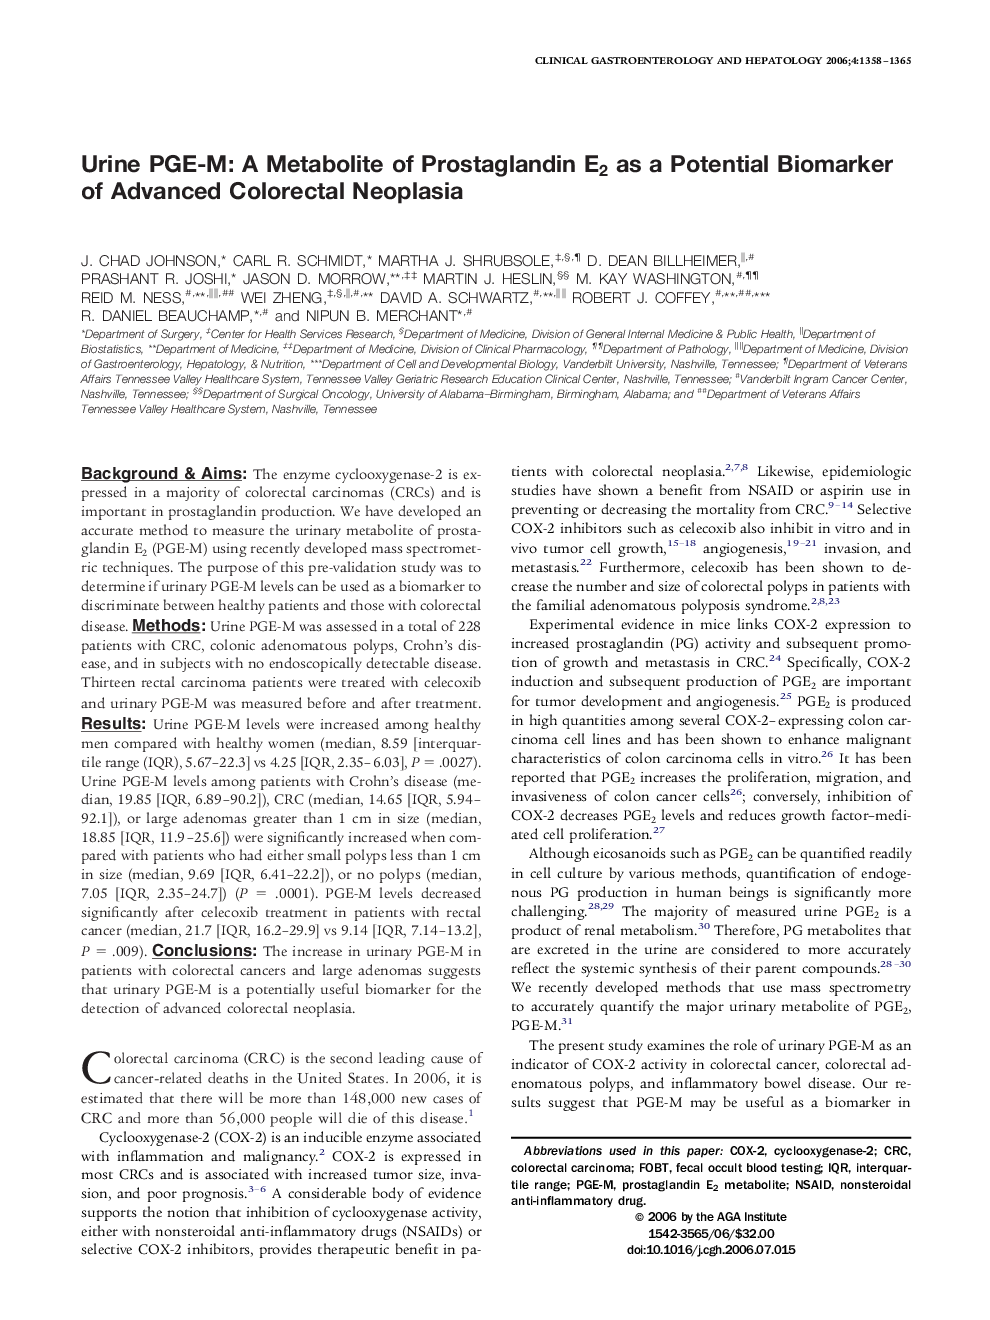 Urine PGE-M: A Metabolite of Prostaglandin E2 as a Potential Biomarker of Advanced Colorectal Neoplasia